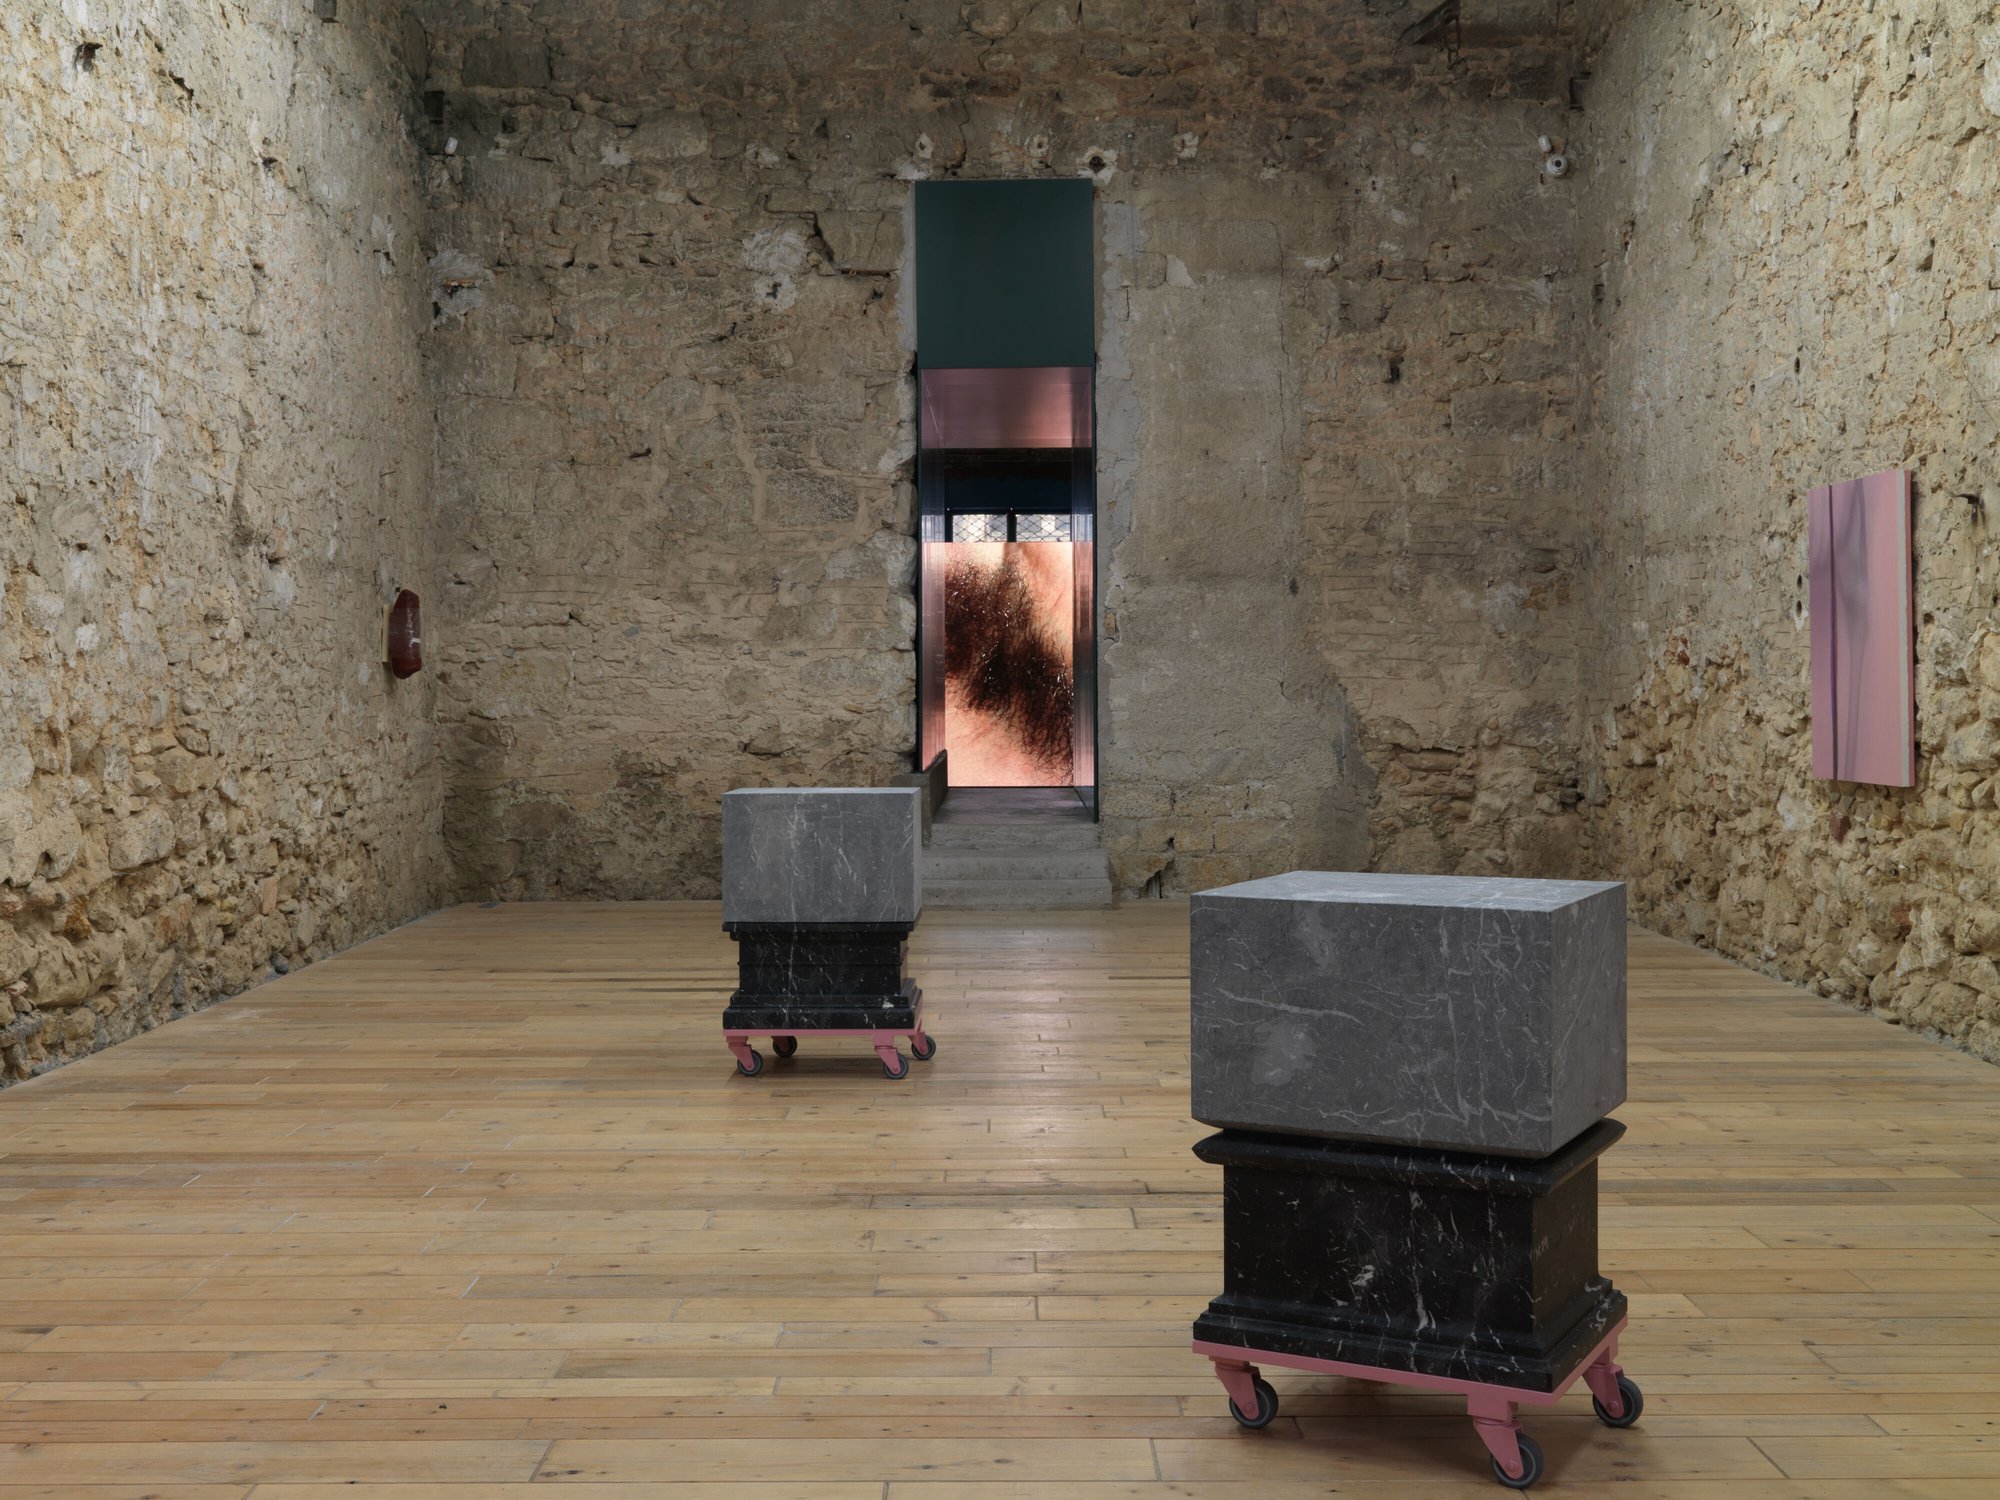 Installation view, Shahryar Nashat, Keep Begging, Rodeo, Piraeus, 2019